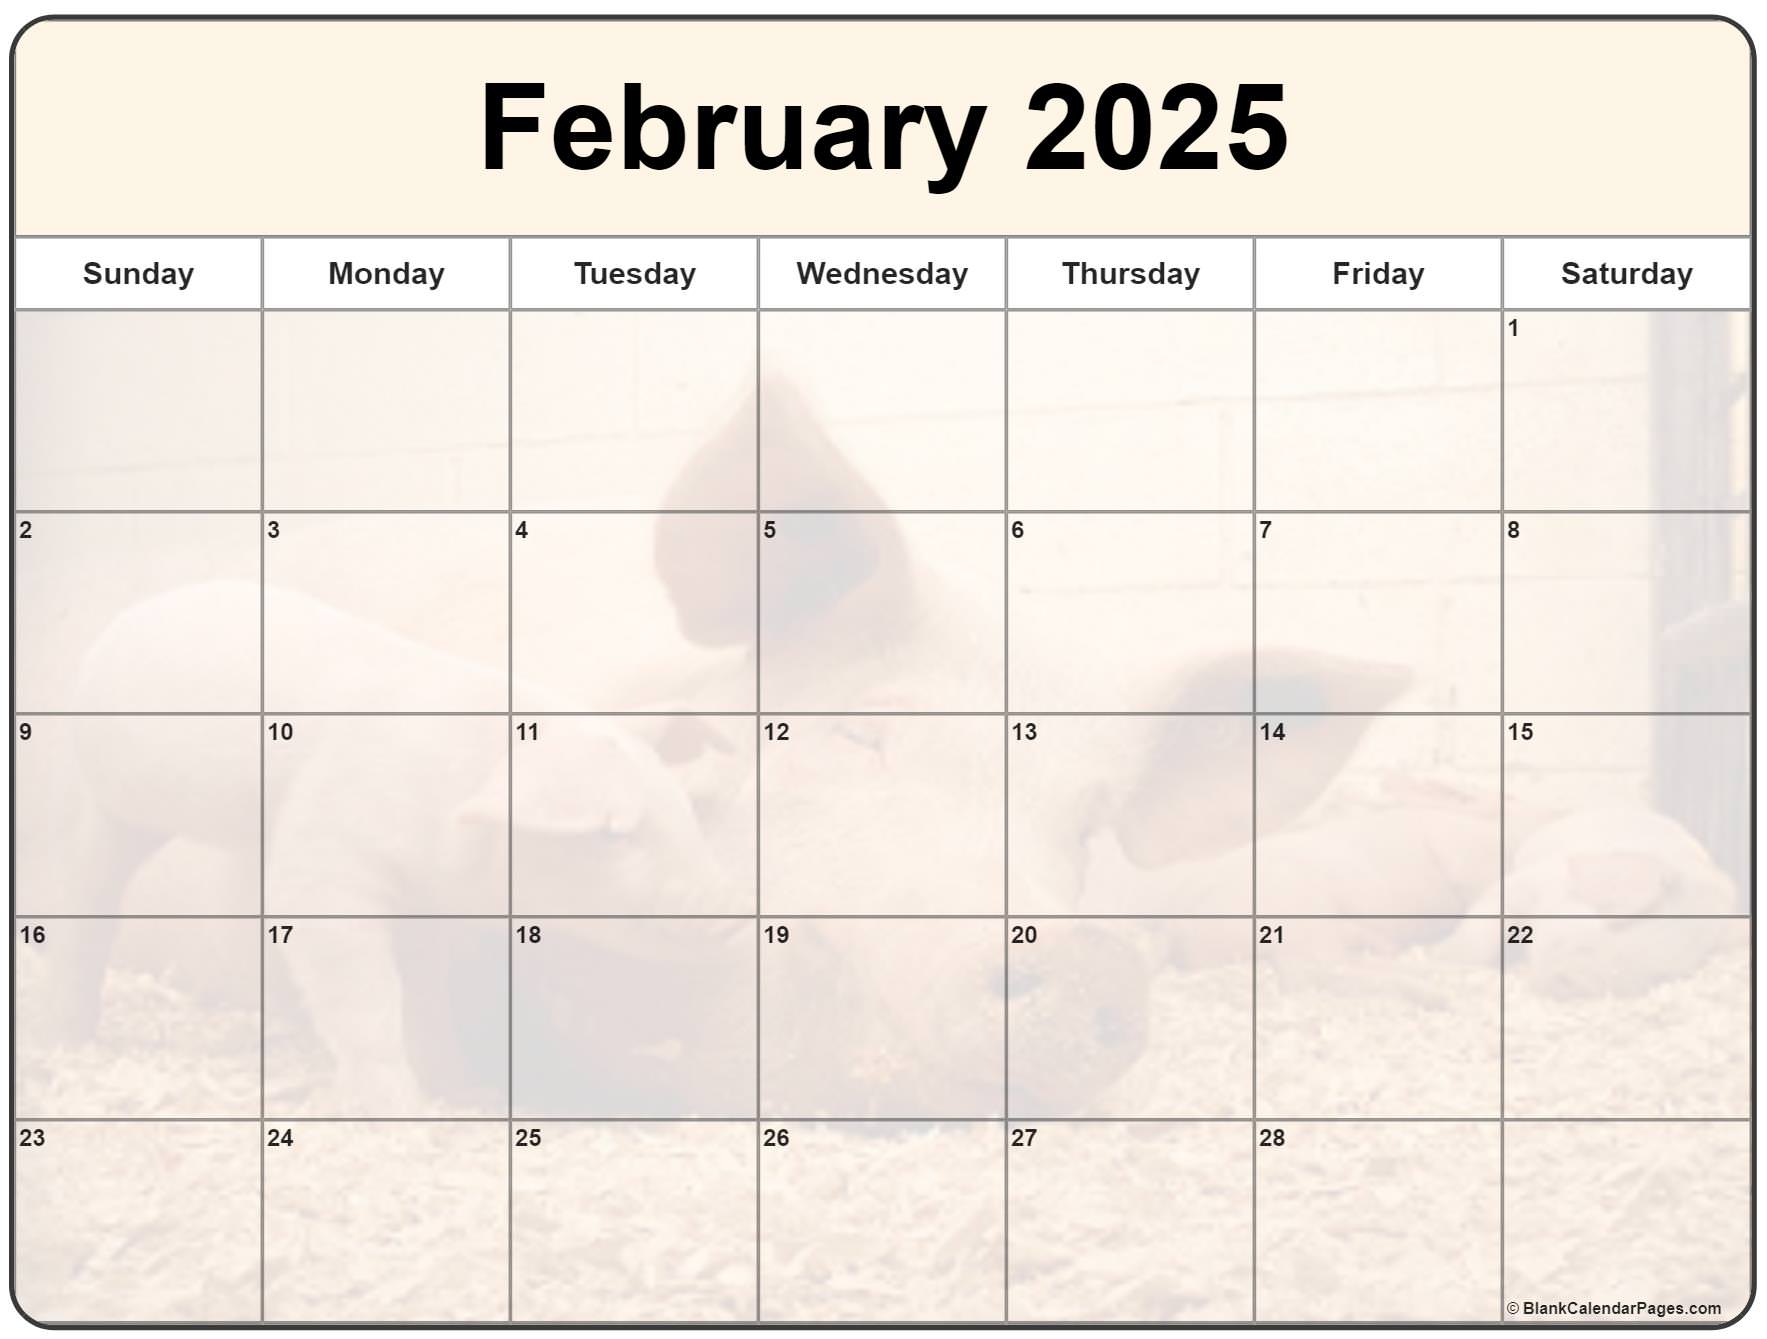 February 2025 Free Calendar